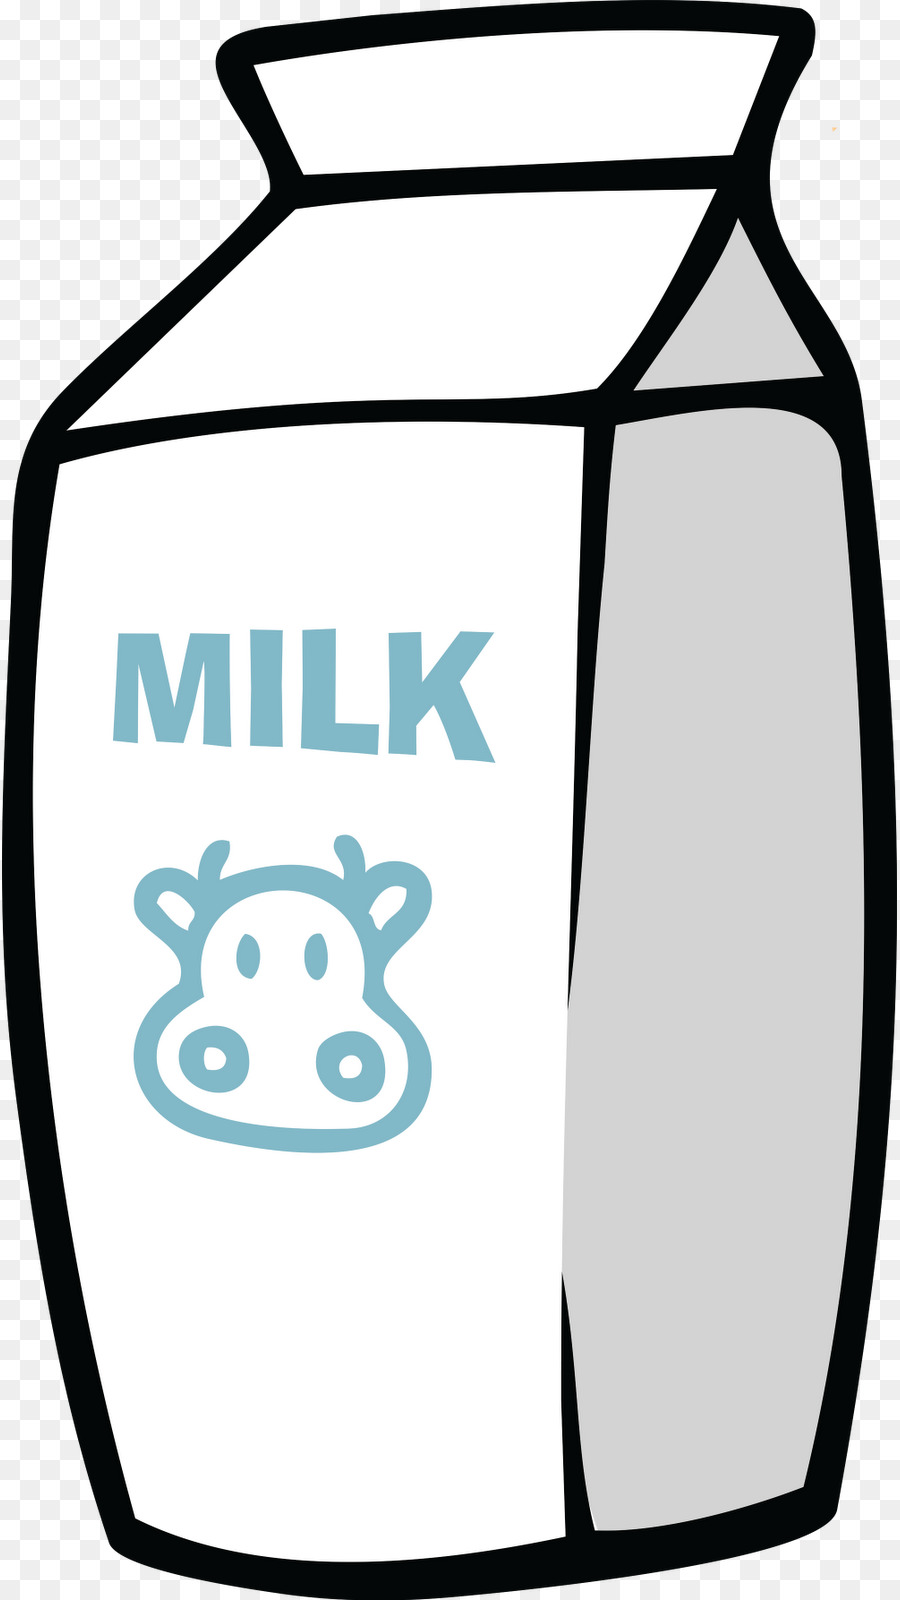 Goat milk Cream Chocolate milk Dairy Products - milk png download - 895*1600 - Free Transparent Milk png Download.